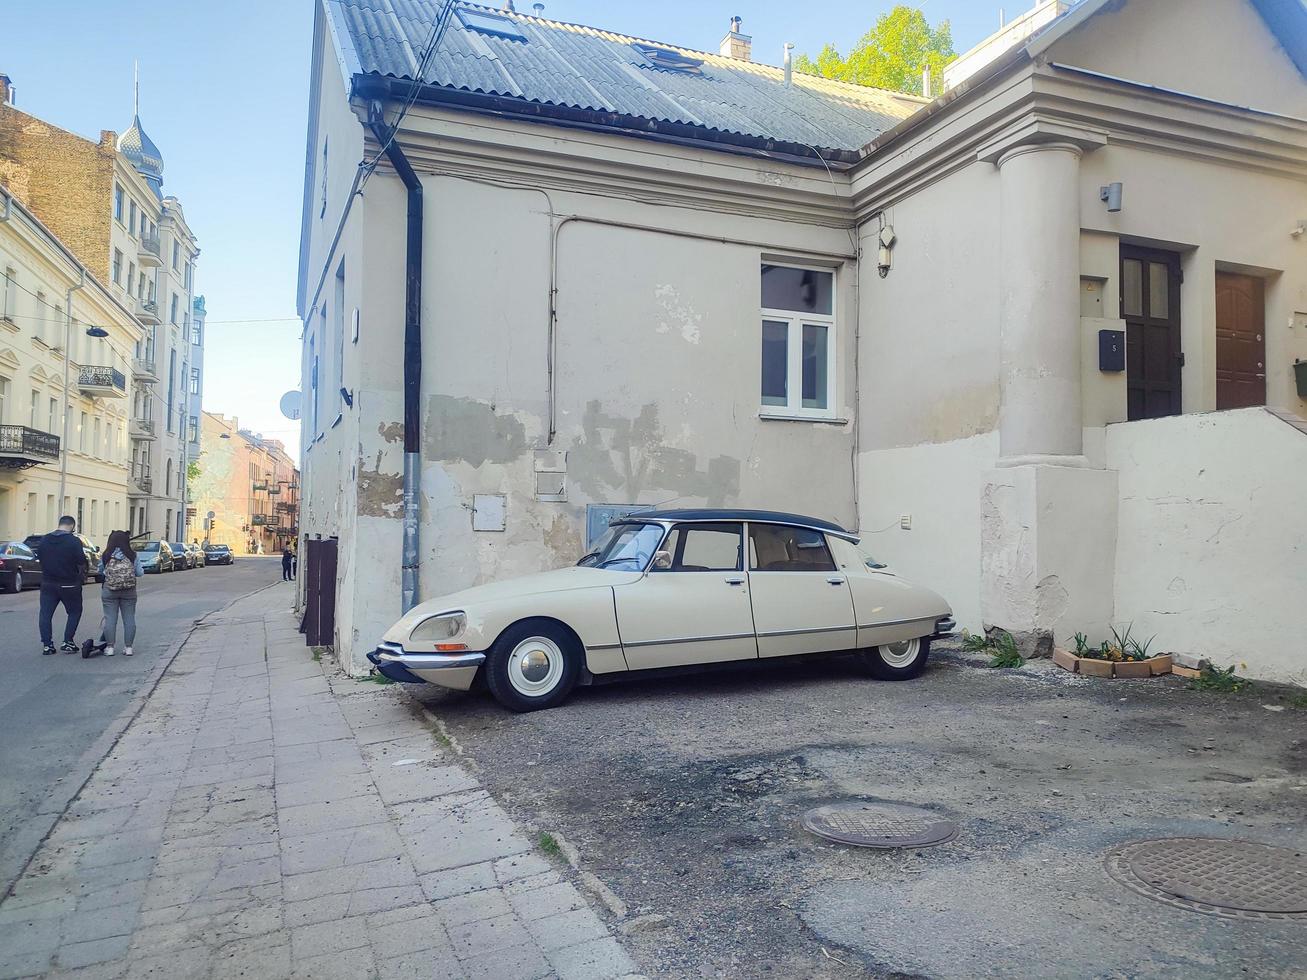 Vilnius, Lithuania, 2022 - Building corner exhibition of old beige Citroen car unexpected finding in Vilnius old town photo